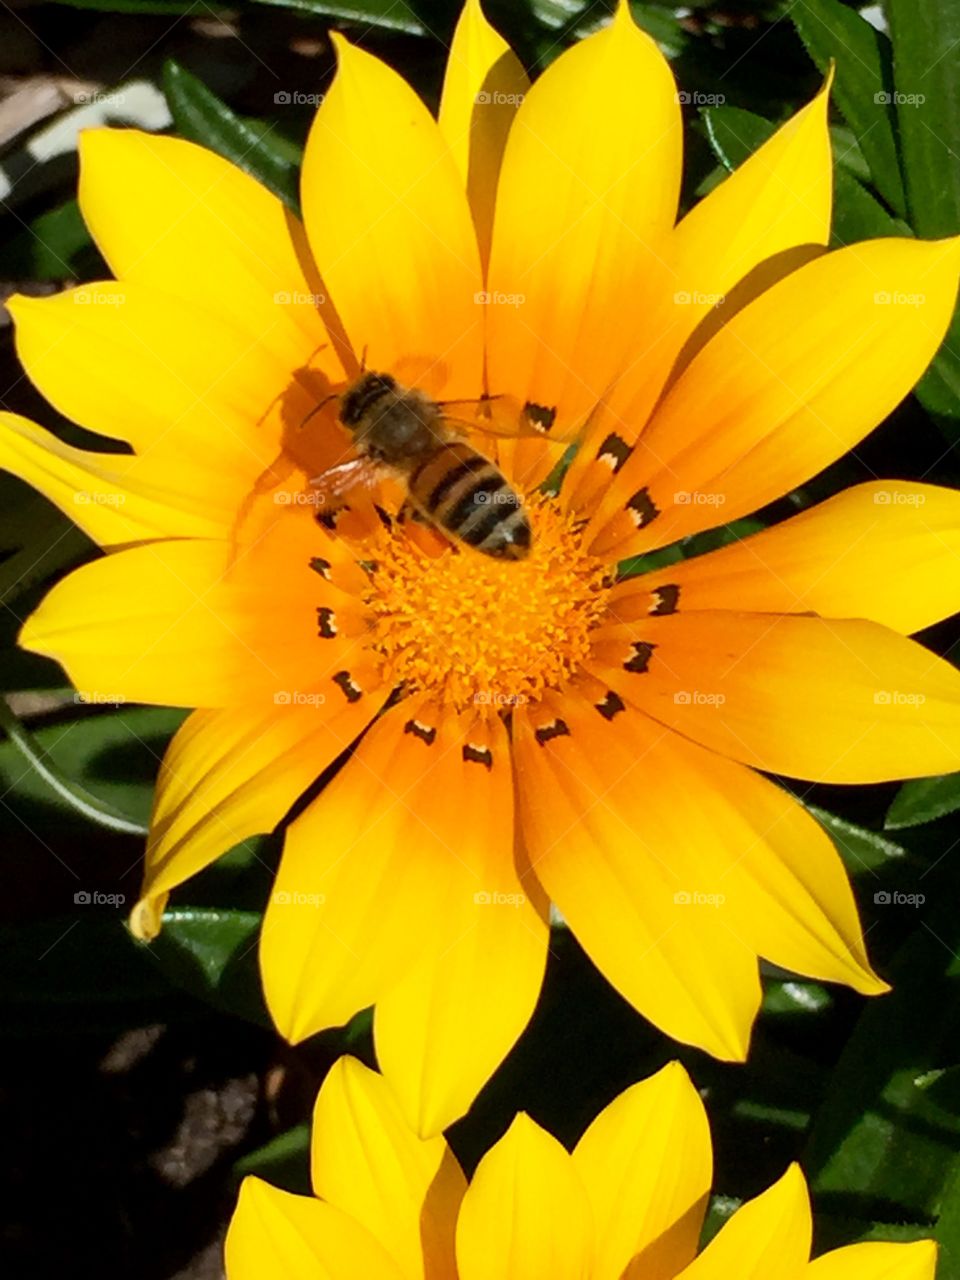 Elevated view of flower and honeybee